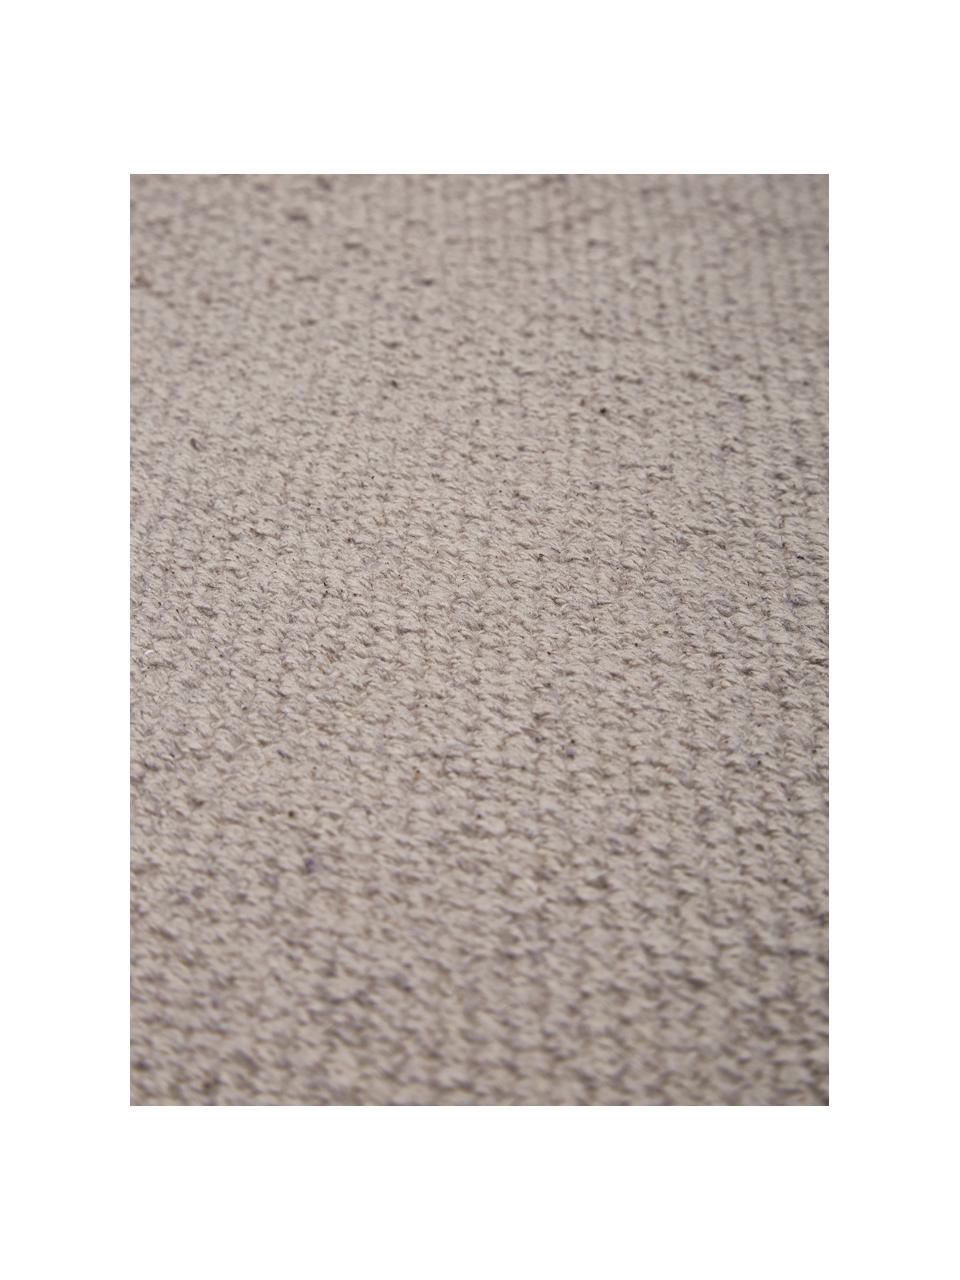 Dünner Baumwollteppich Agneta in Grau, handgewebt, 100% Baumwolle, Grau, B 50 x L 80 cm (Größe XXS)